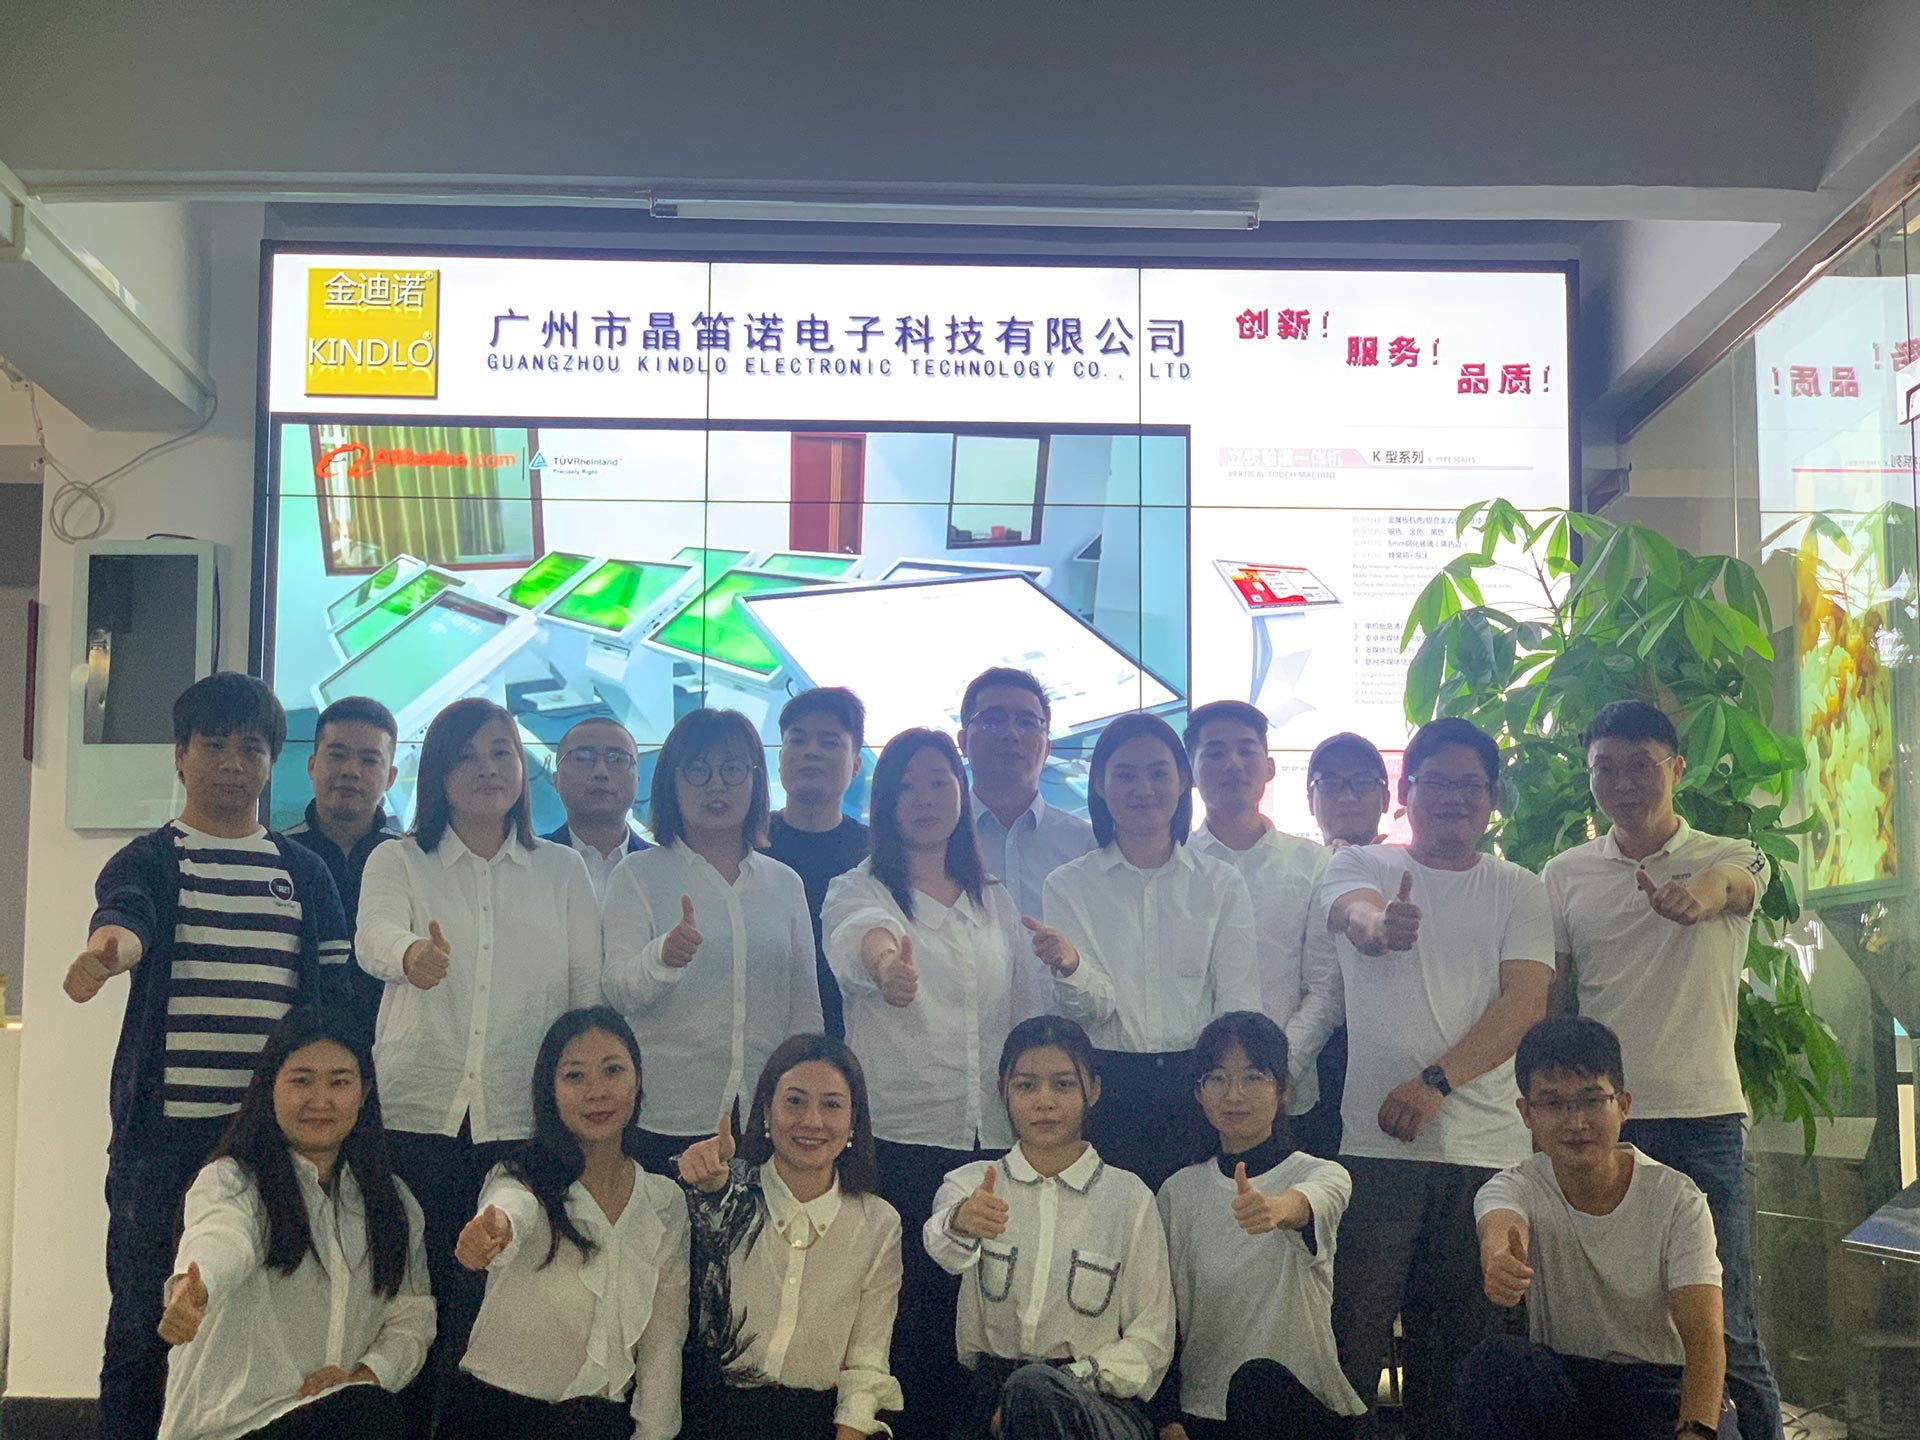 Chine Guangzhou Jingdinuo Electronic Technology Co., Ltd.